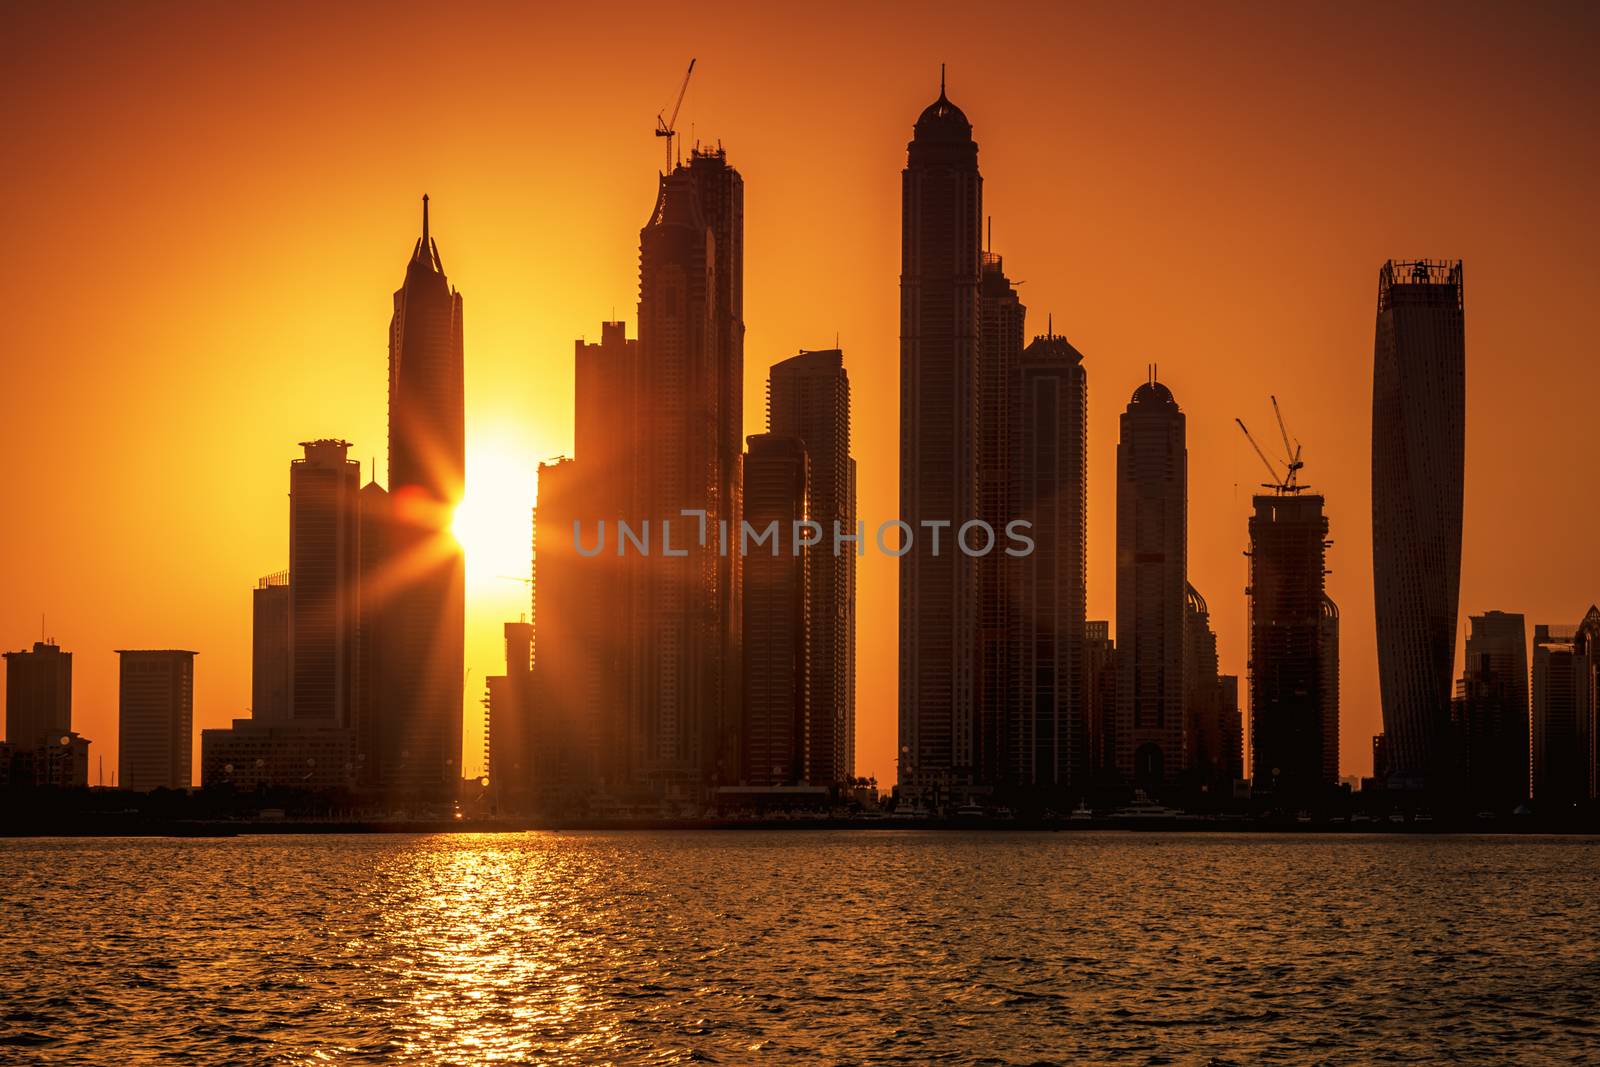 View of Dubai at sunrise by vwalakte